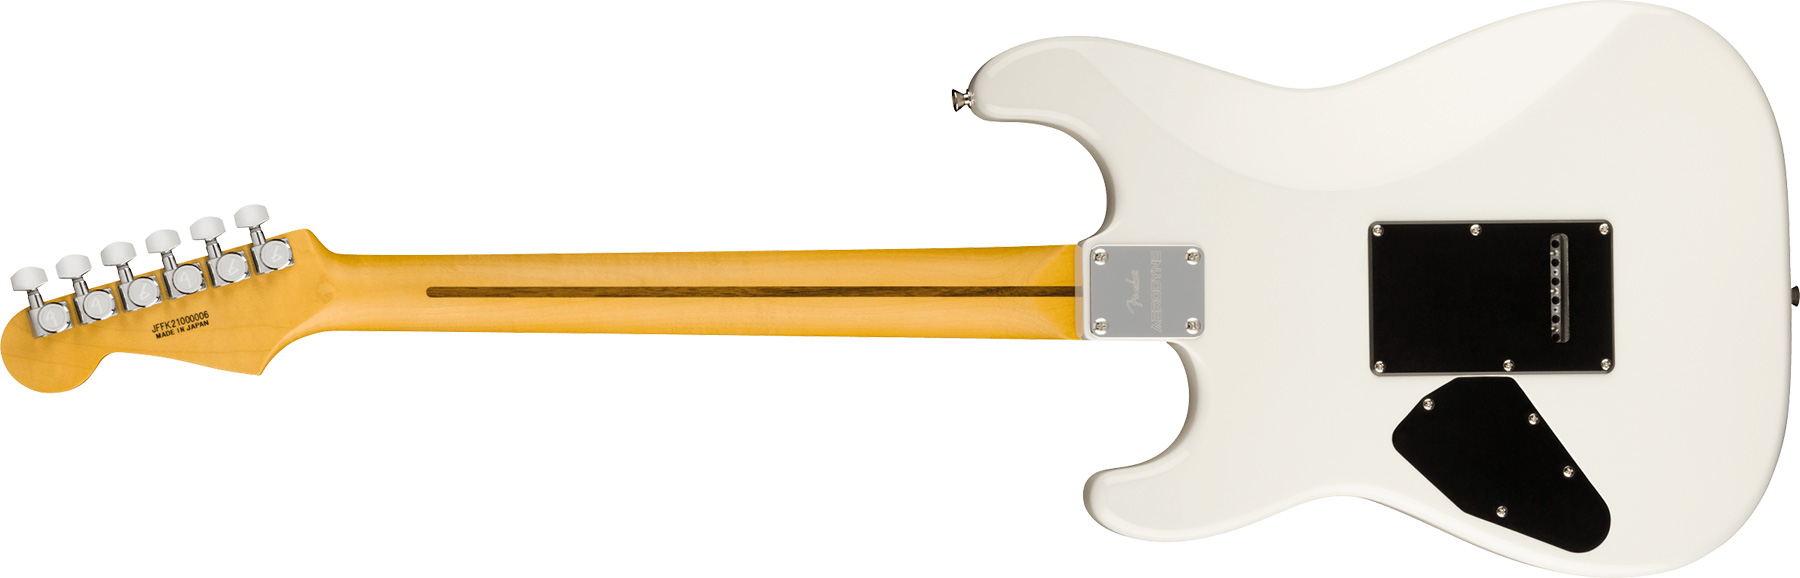 Fender Strat Aerodyne Special Jap 3s Trem Rw - Bright White - Guitare Électrique Forme Str - Variation 1